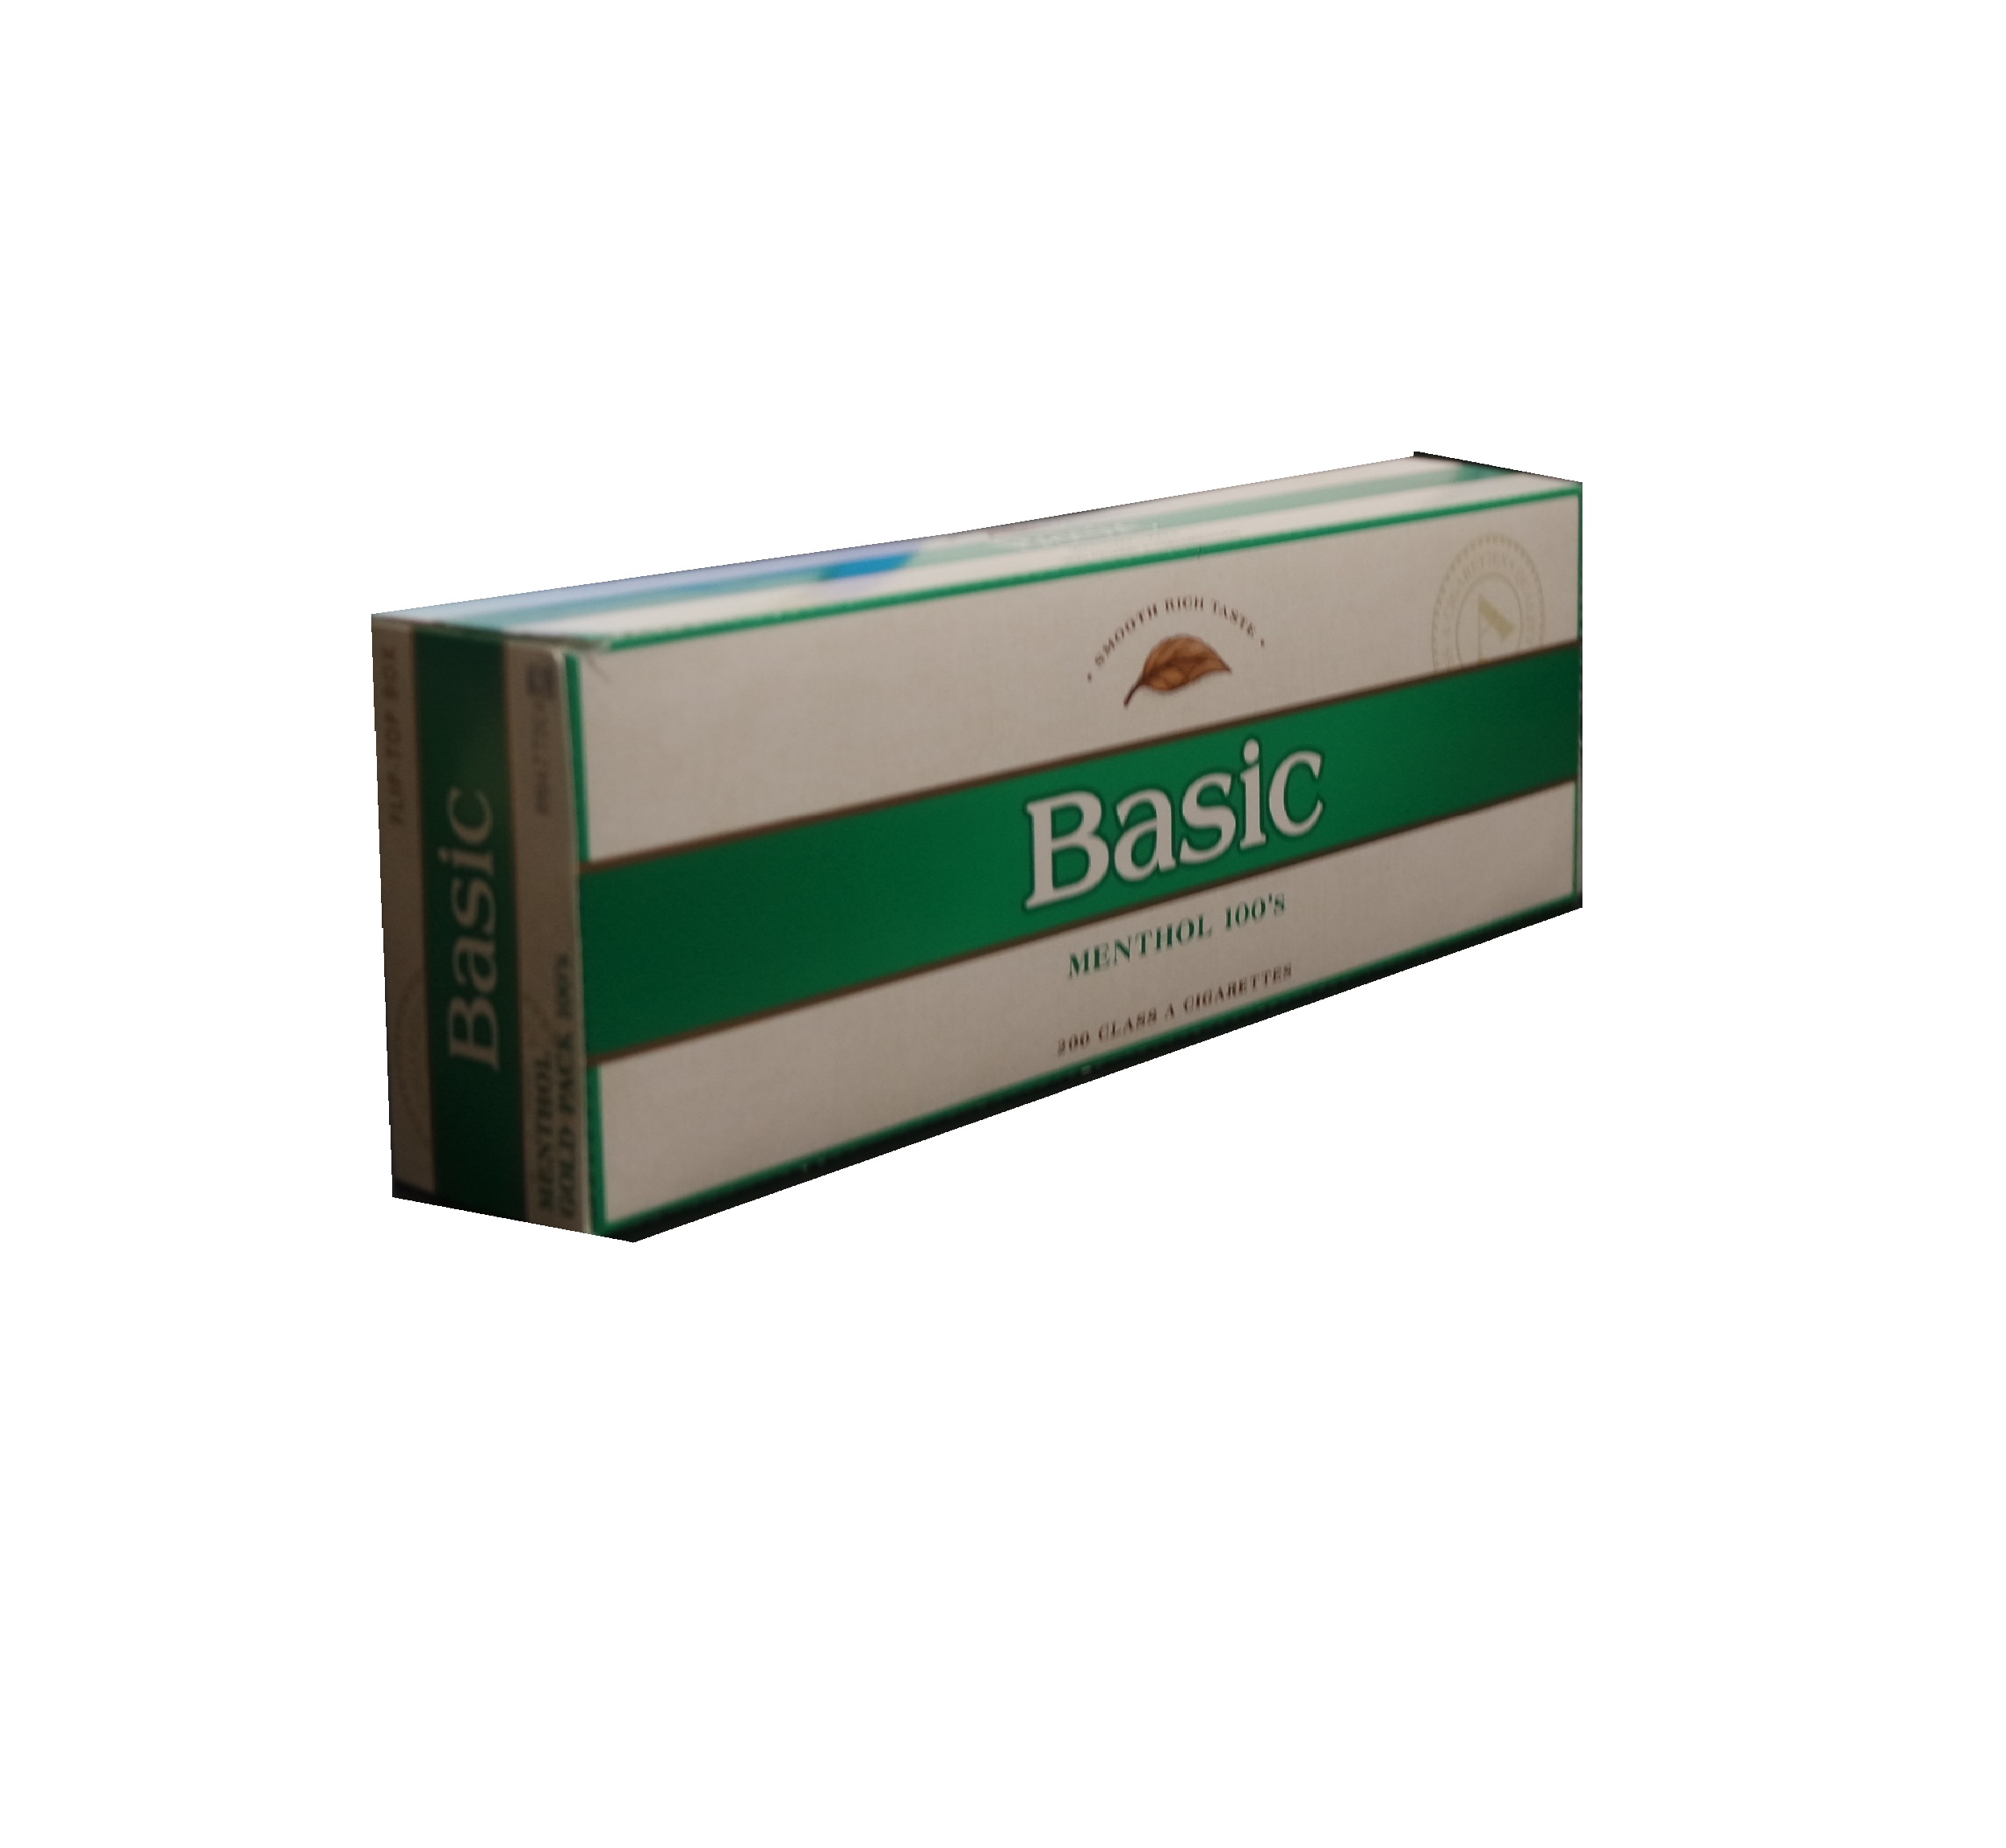 Basic menthol gold 100 box